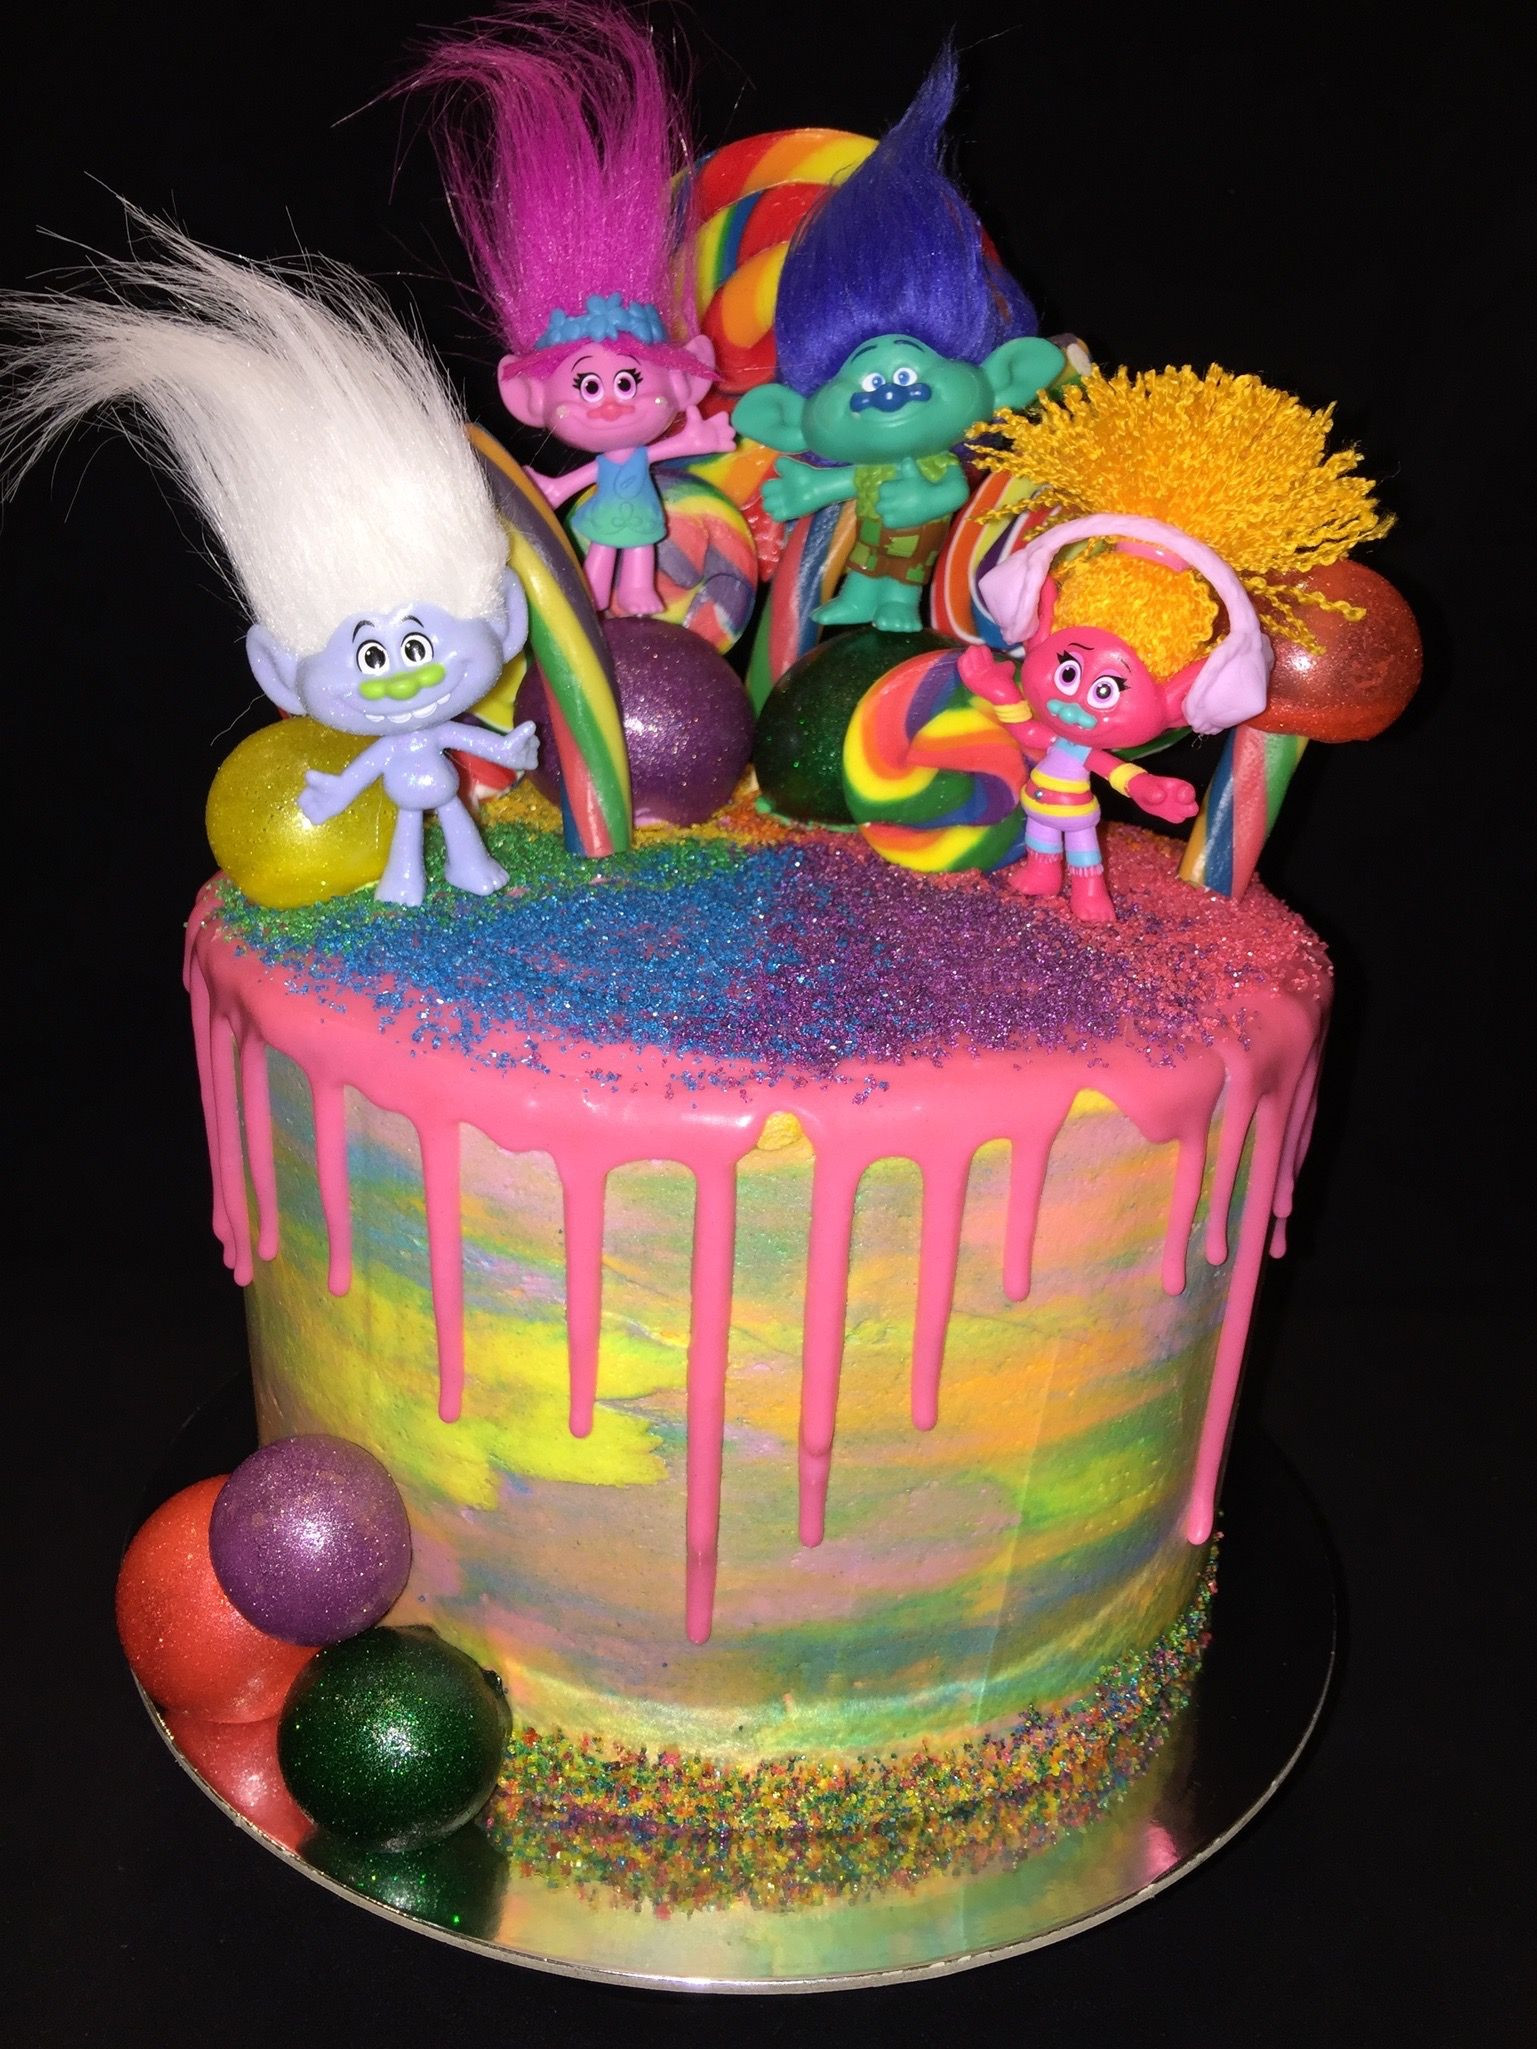 Best ideas about Dreamworks Trolls Birthday Cake
. Save or Pin More Glitter Dreamworks Trolls cake edible glitter Now.